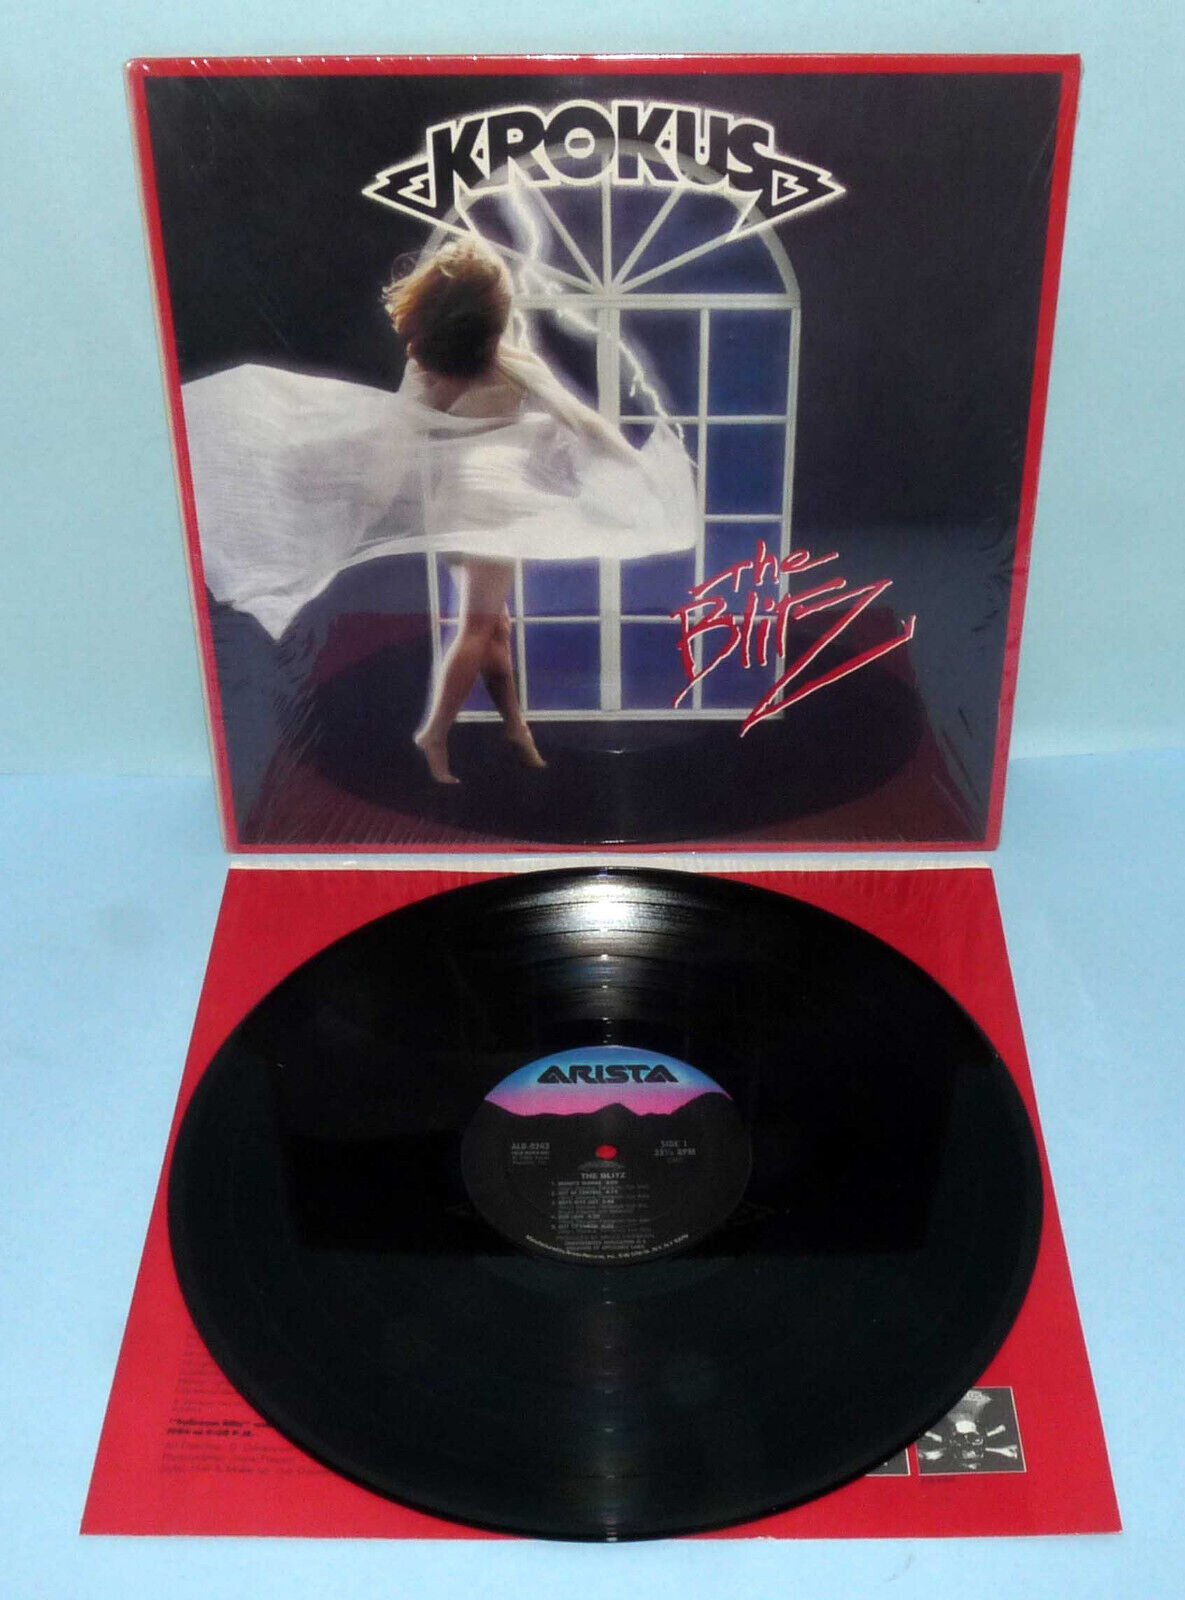 Krokus - The Blitz LP Open Shrink VG+ or Better Arista AL8-8243